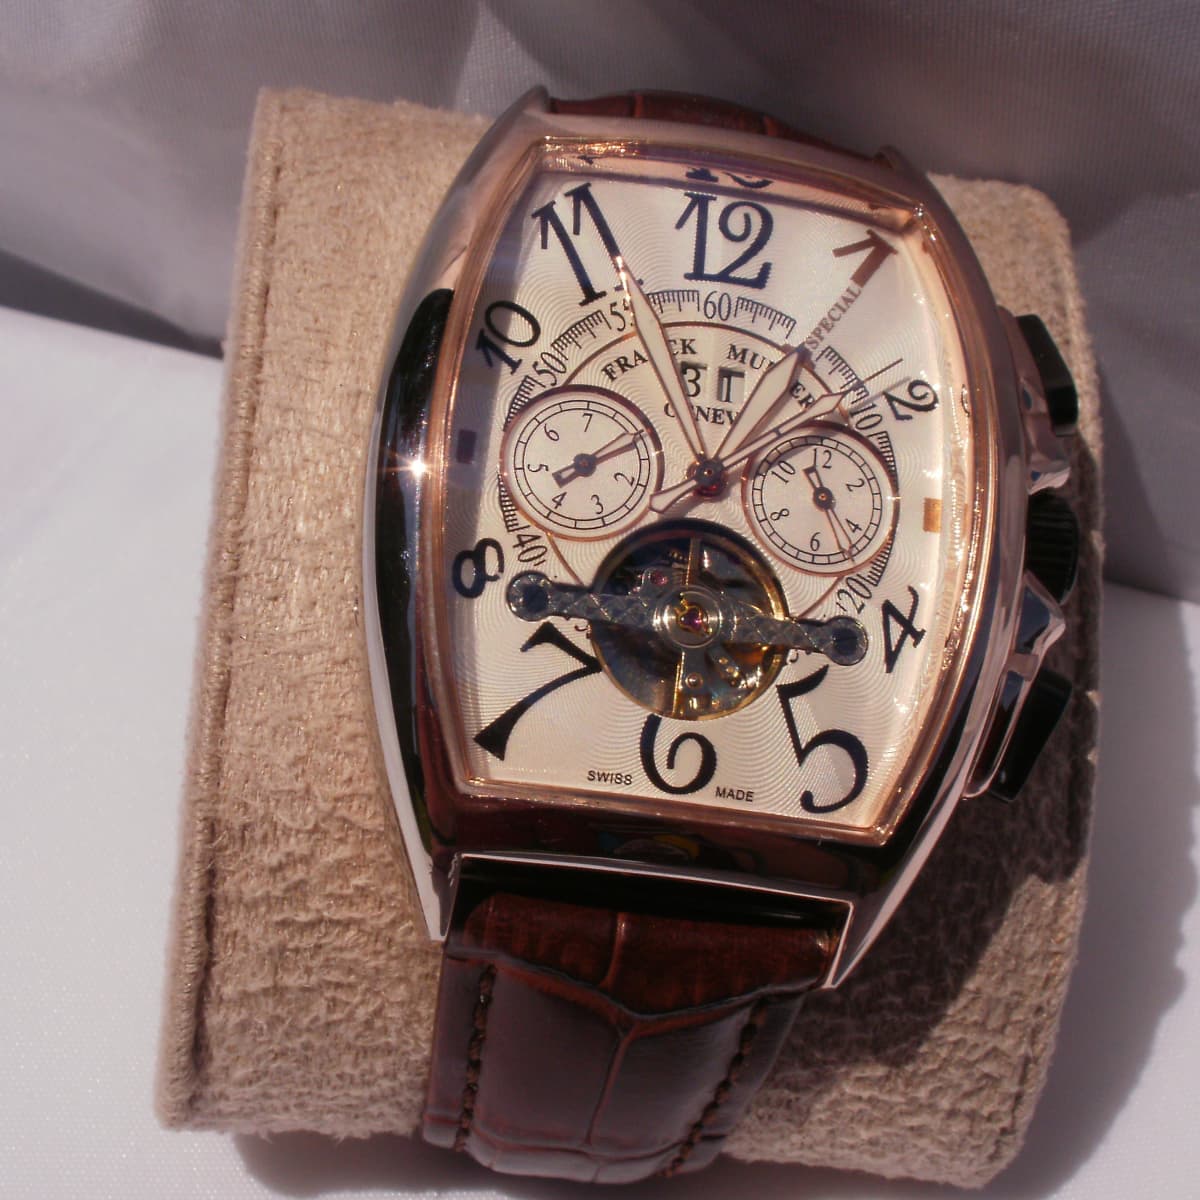 Франк мюллер часы оригинал. Часы Franck Muller 344 1932. Часы Franck Muller 1932. Фрэнк Мюллер Женева часы. Часы Франк Мюллер Geneve.